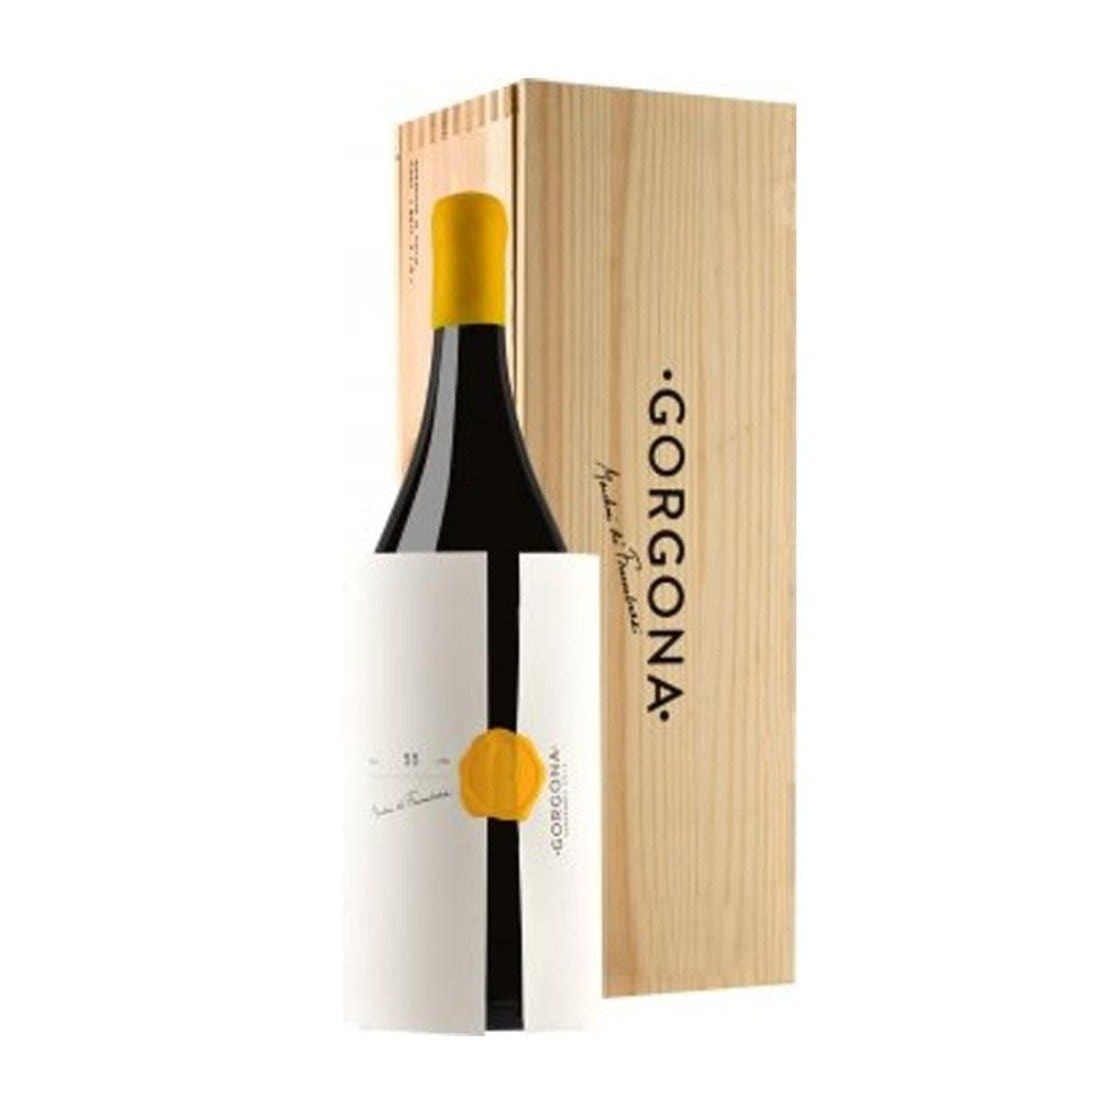 Gorgona 2021 Igt Costa Toscana Bianco Magnum - Frescobaldi-Vinolog24.com